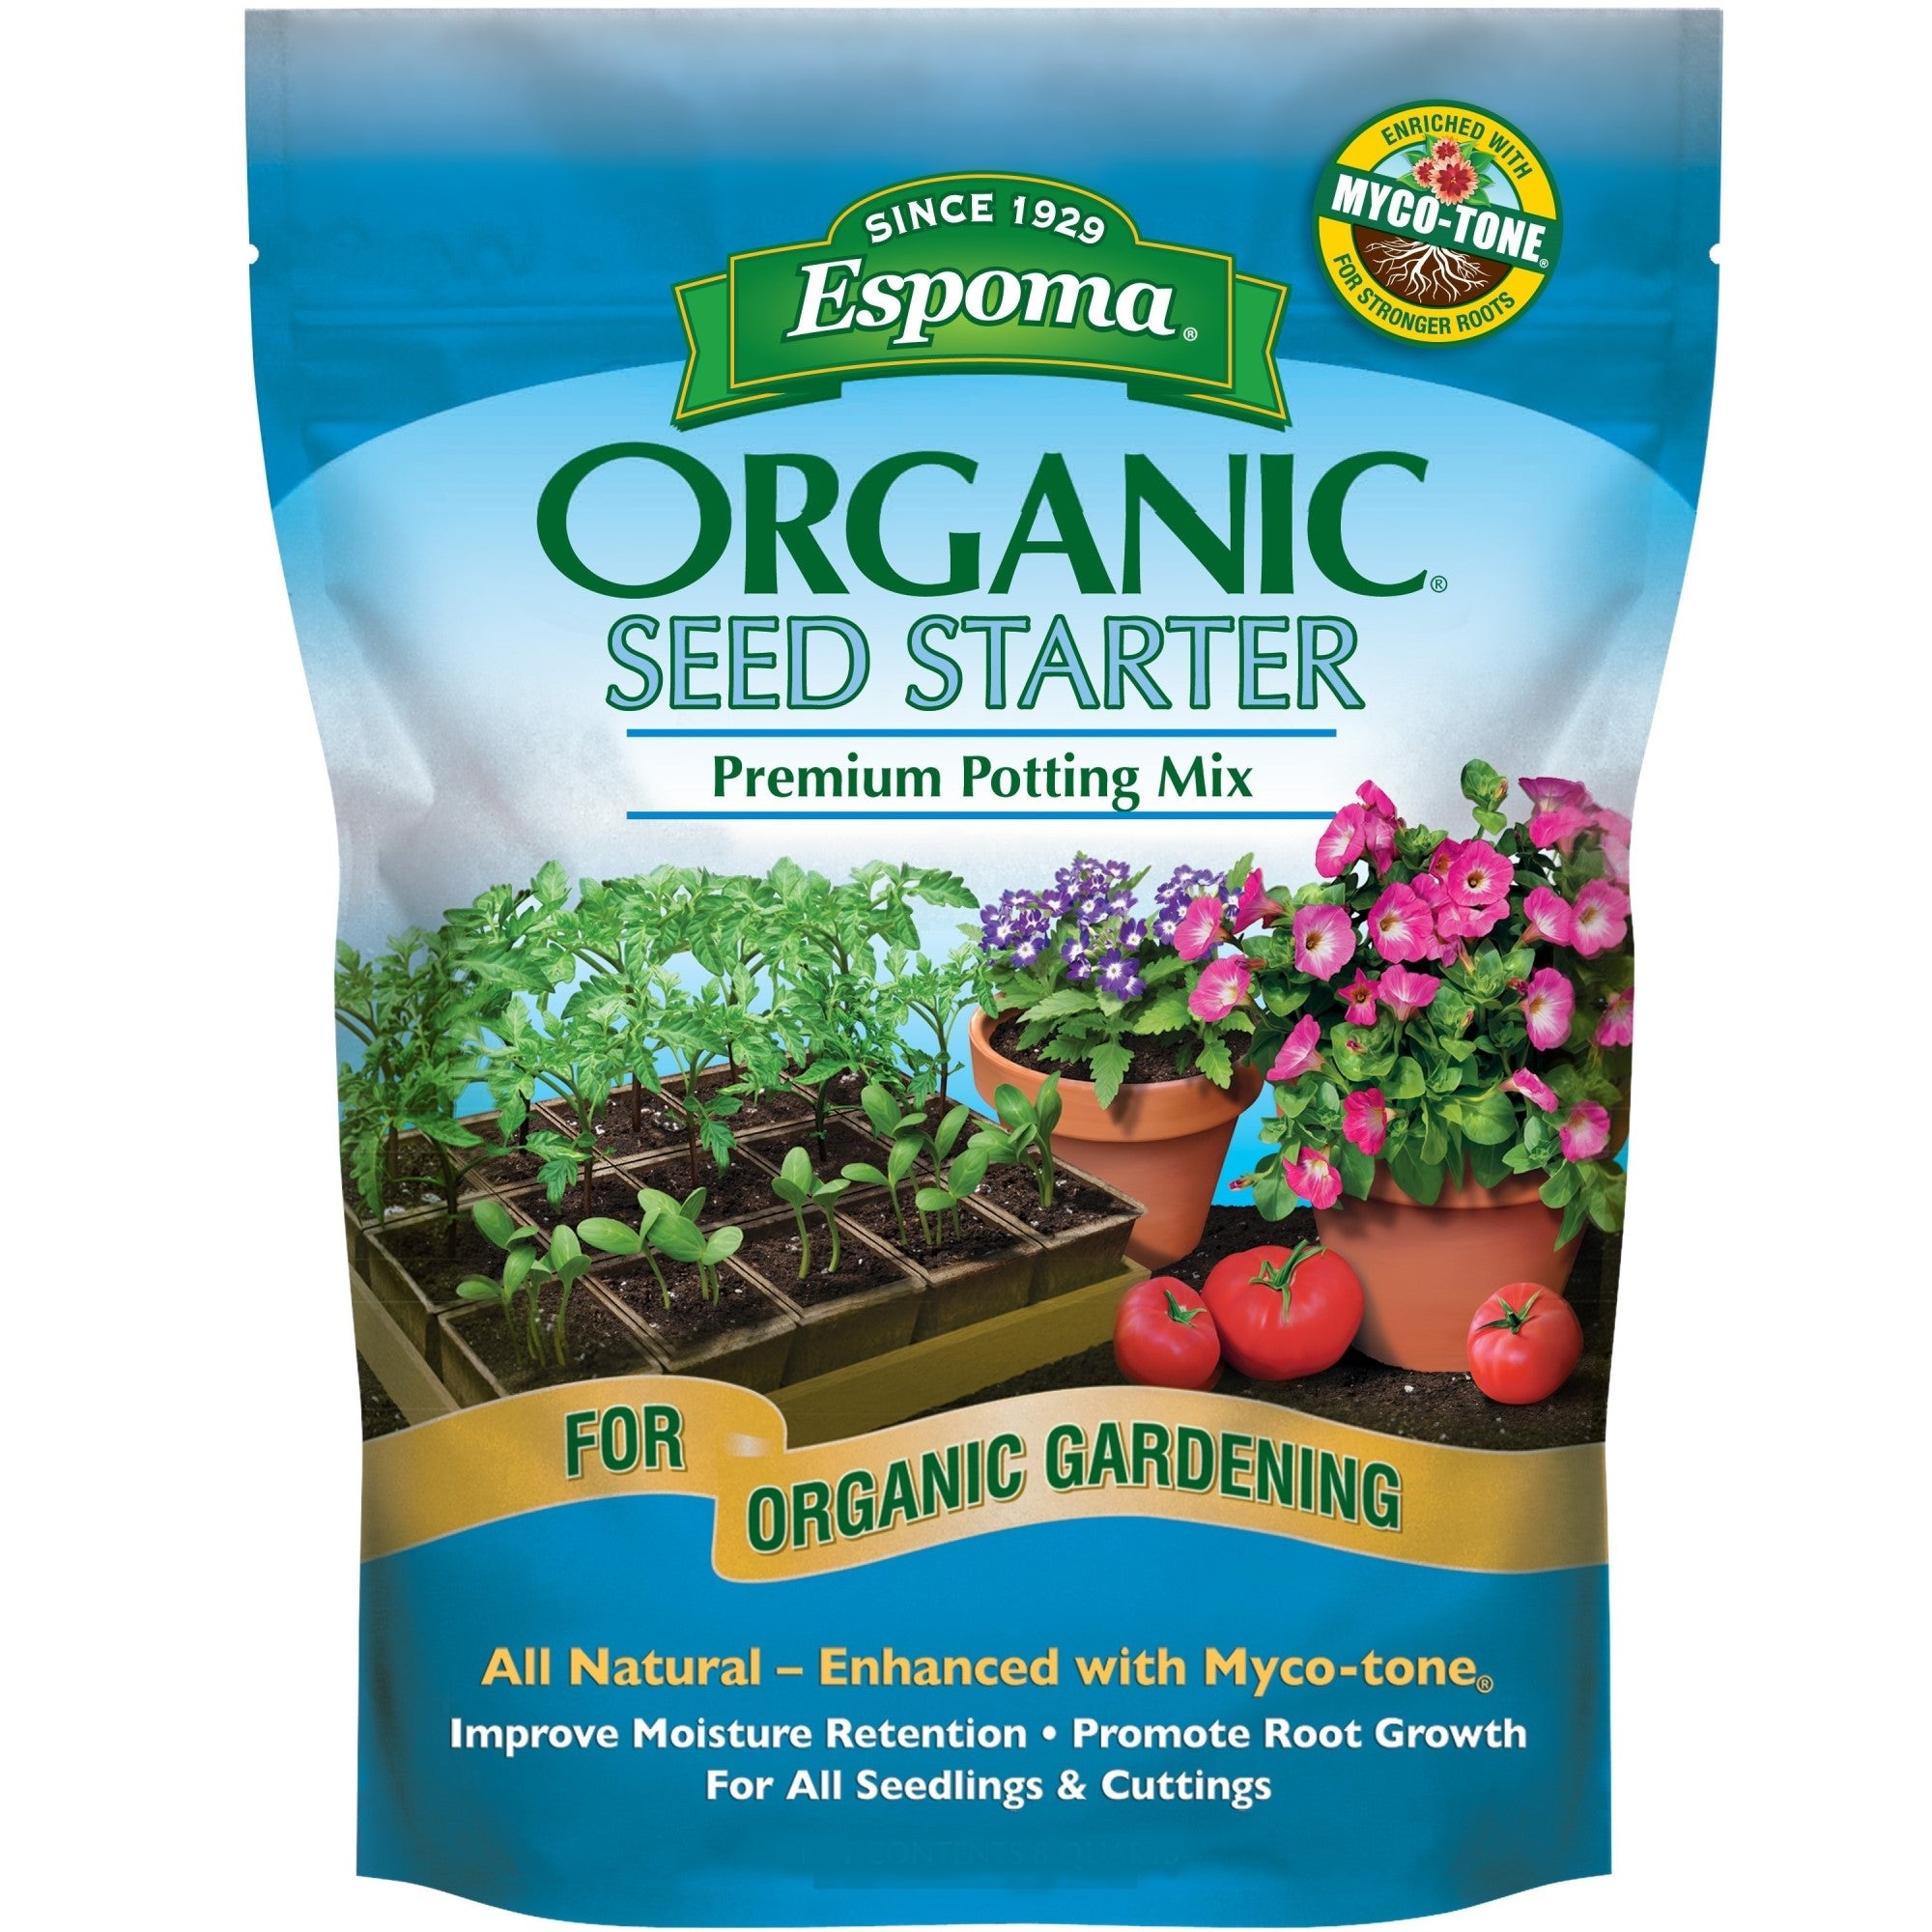 Espoma Organic Seed Starter Premium Potting Soil Mix with Myco-tone, All Natural & Organic Mix for Organic Gardening